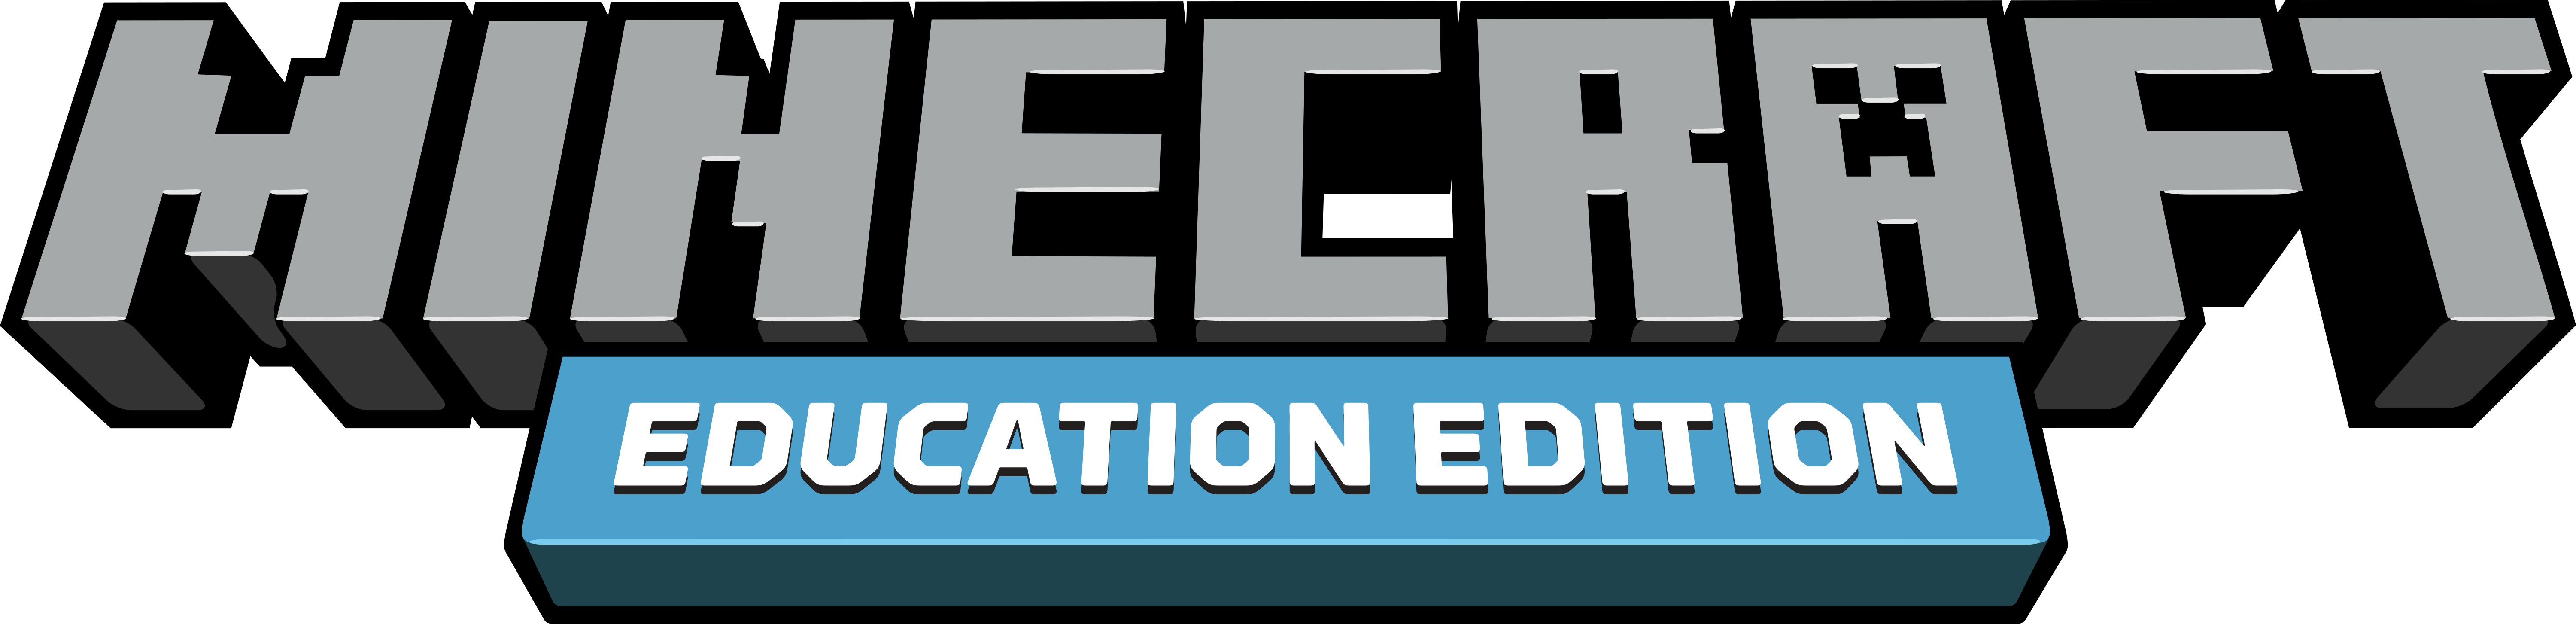 minecraft education edition free